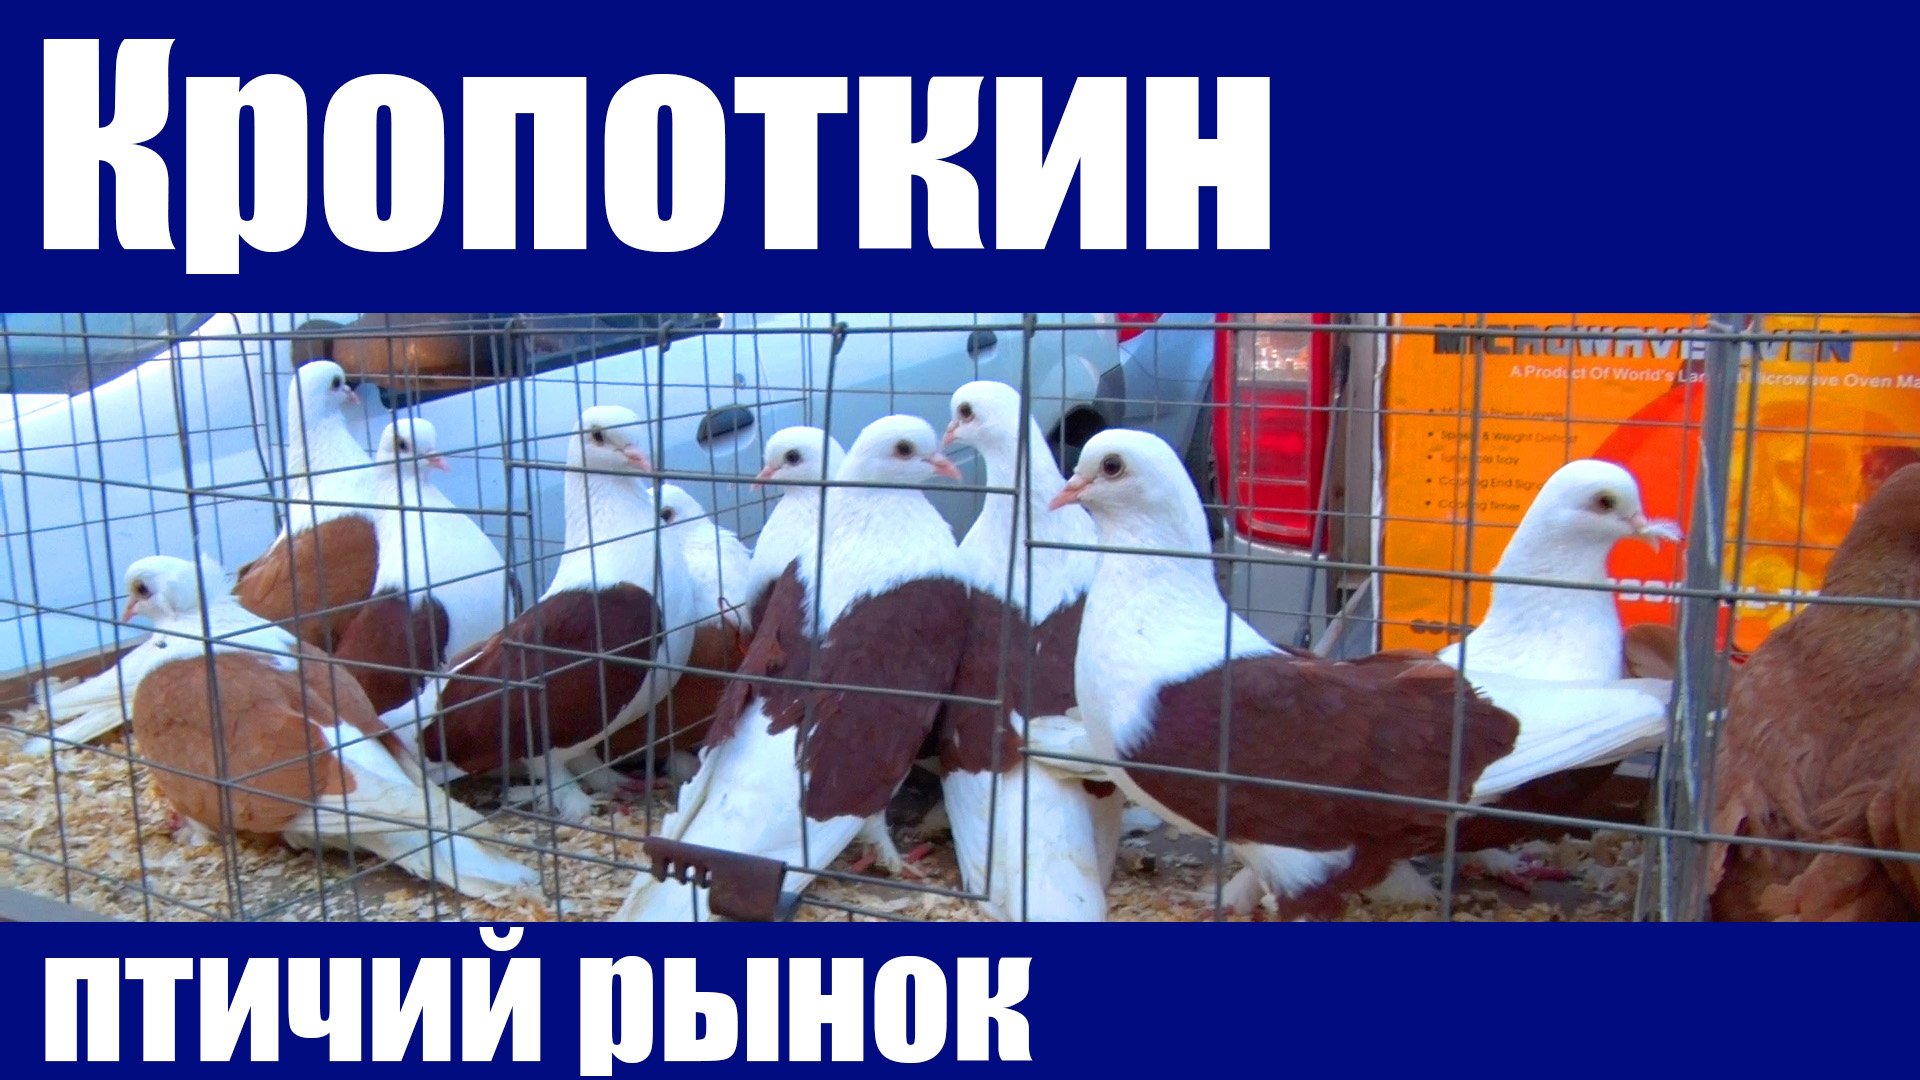 Голуби в кропоткине. Птичий рынок в Кропоткине. Ярмарка голубей в Кропоткине. Выставка голубей. Выставка голубей в Кропоткине.